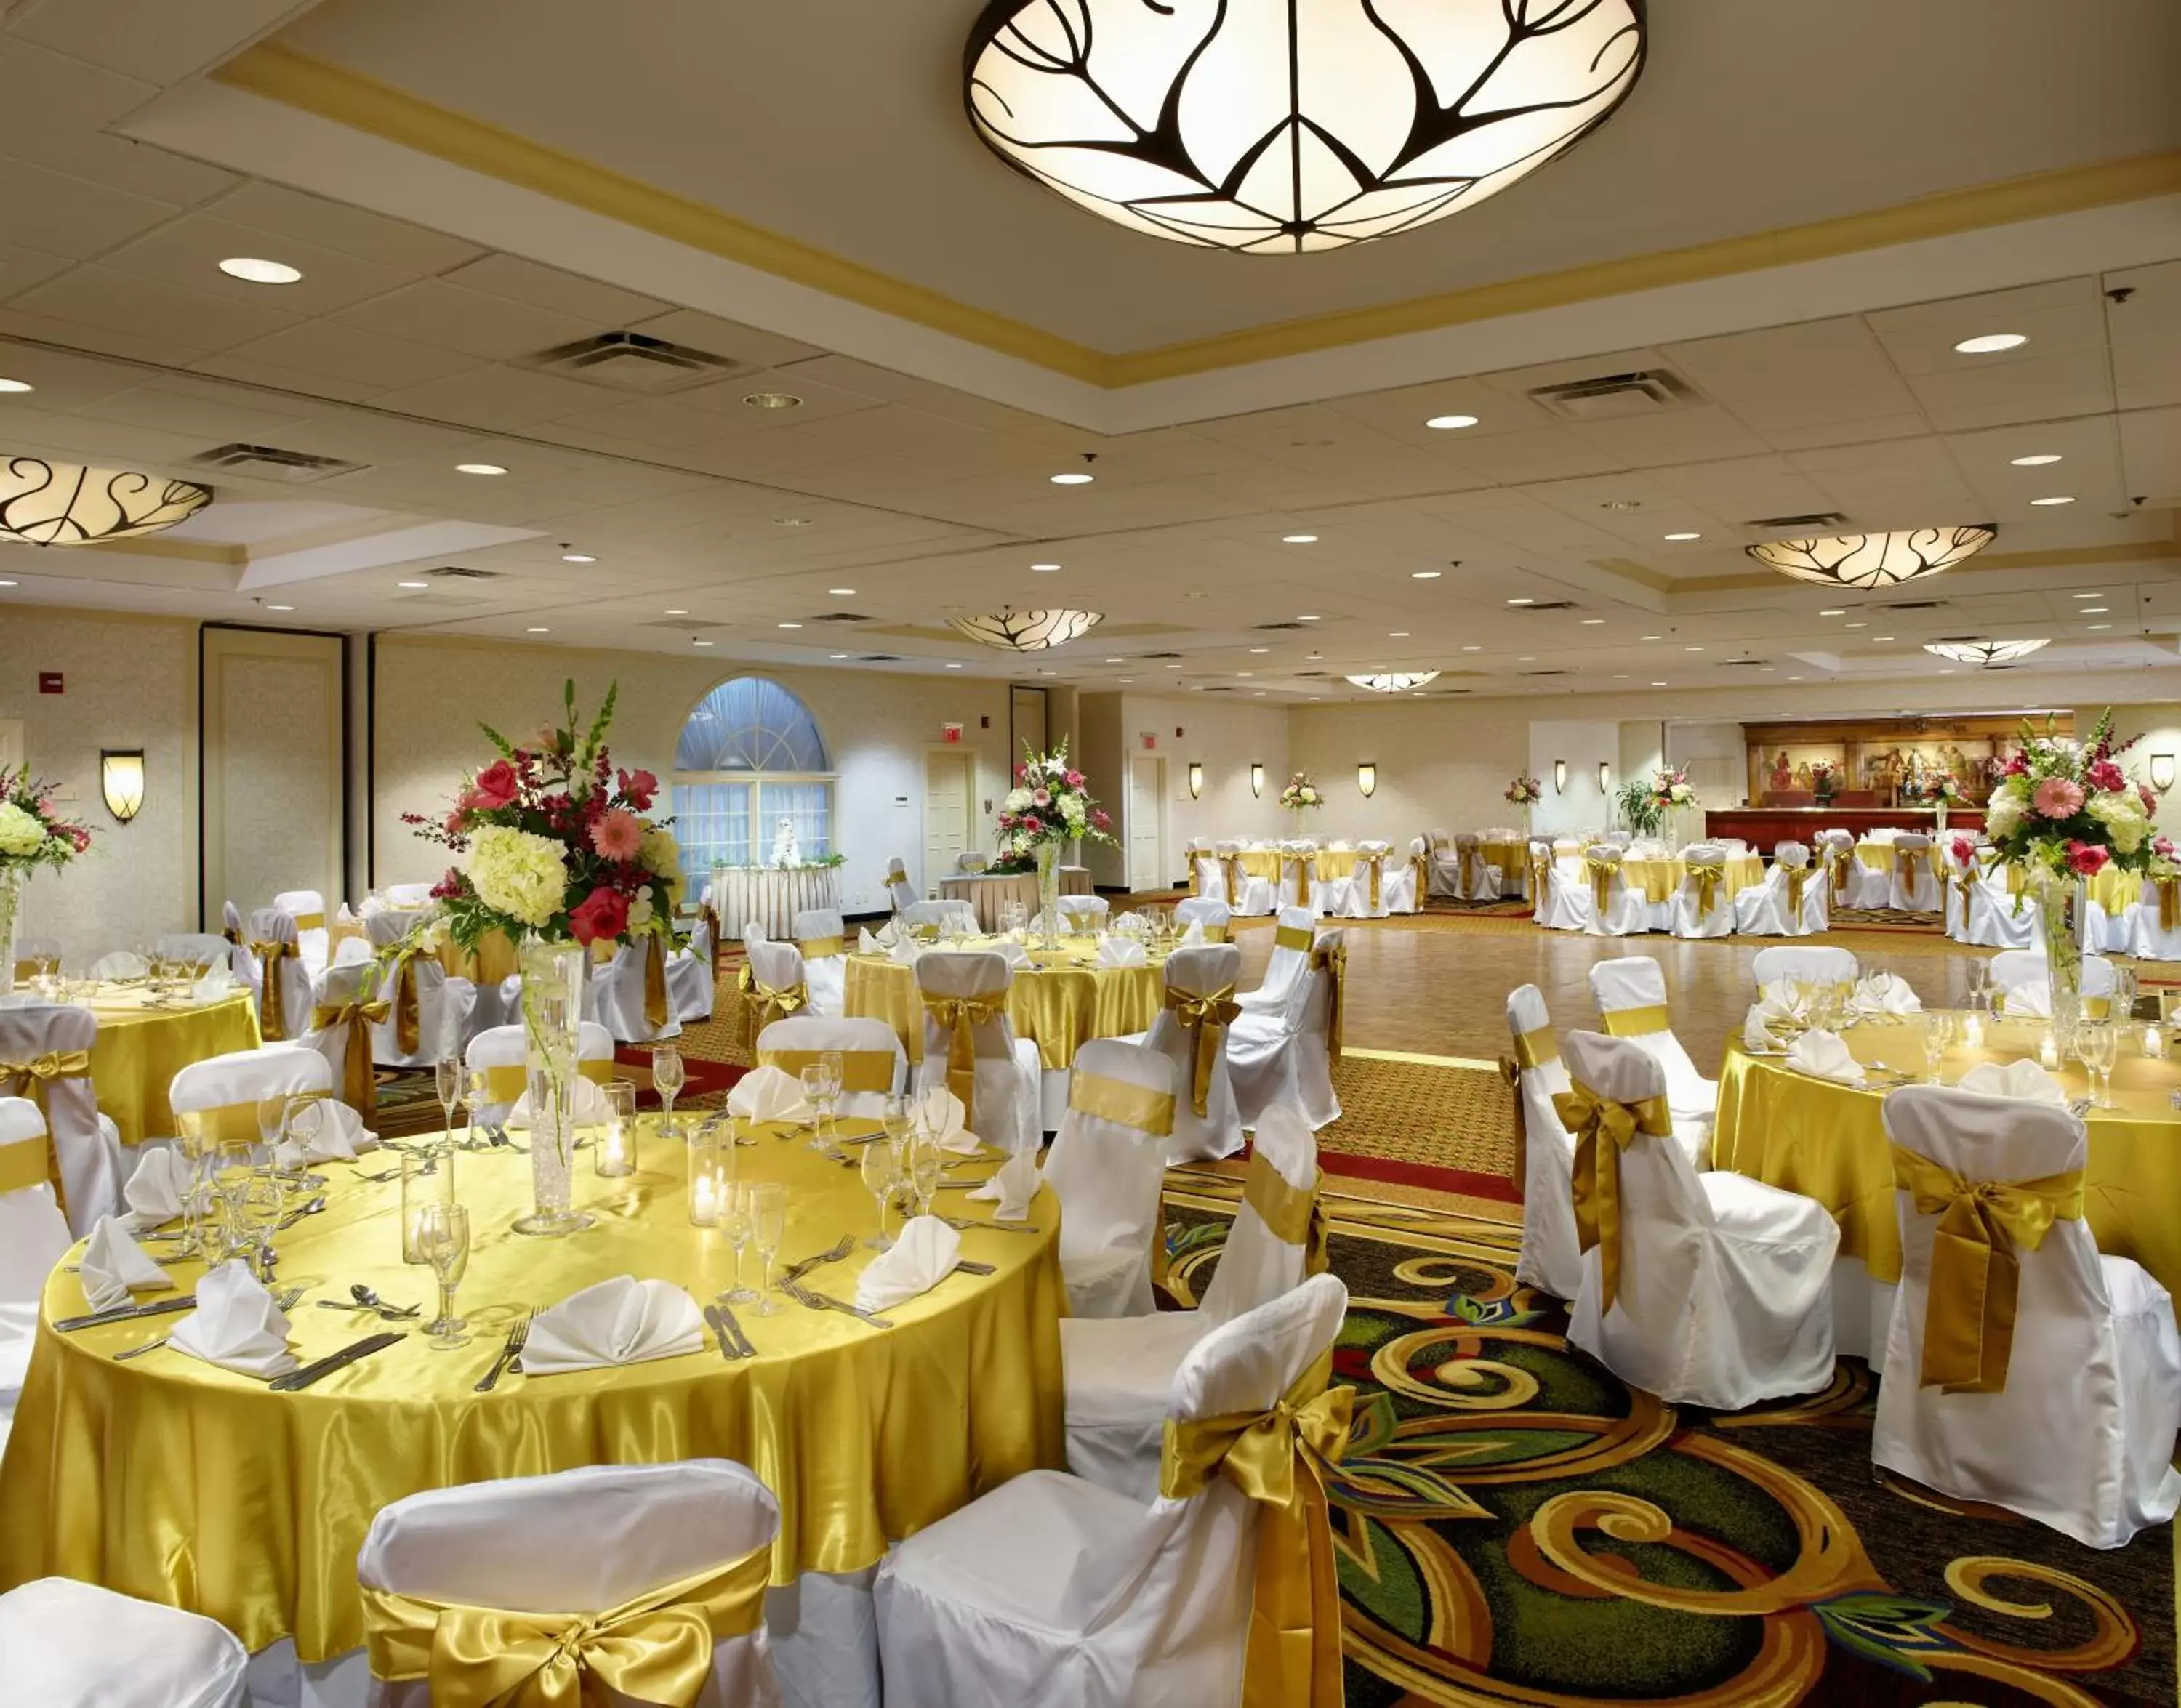 Banquet/Function facilities, Banquet Facilities in Clinton Inn Hotel Tenafly